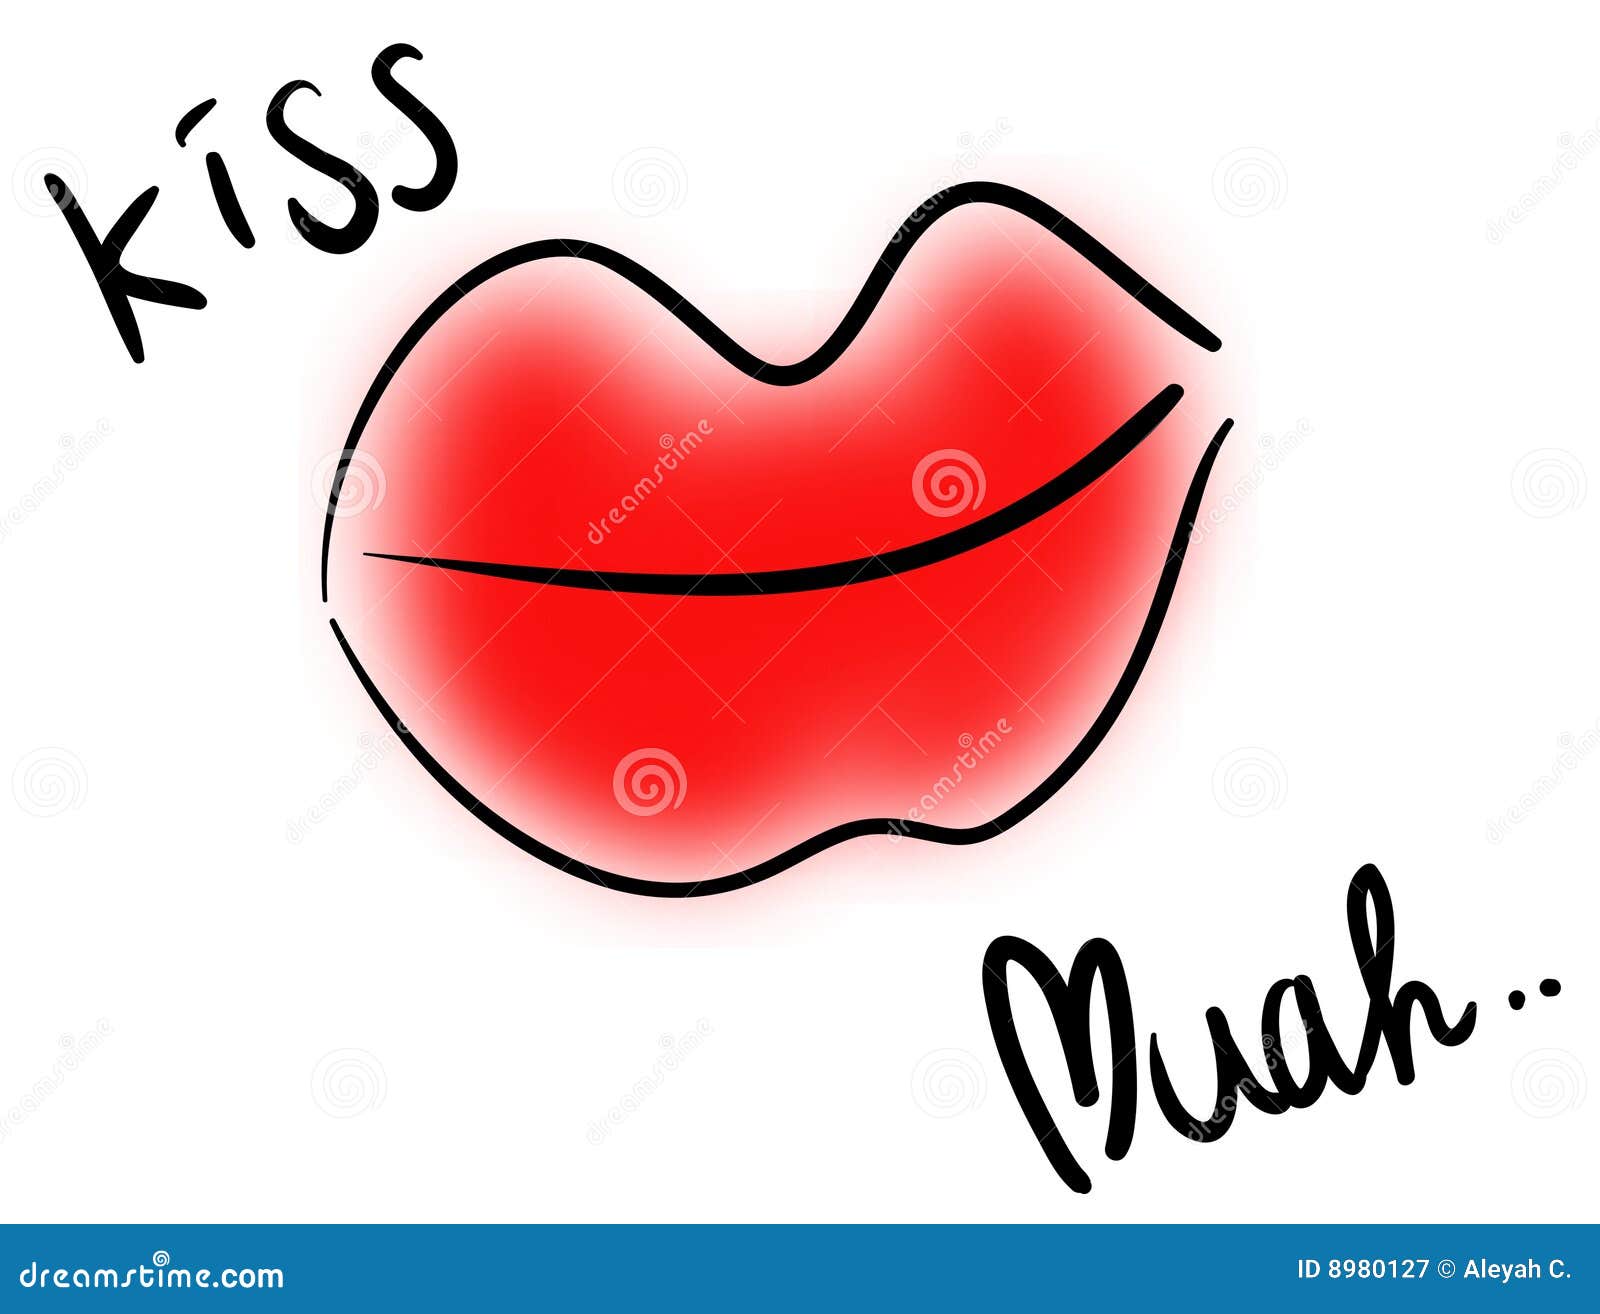 clip art animated kissing lips - photo #34